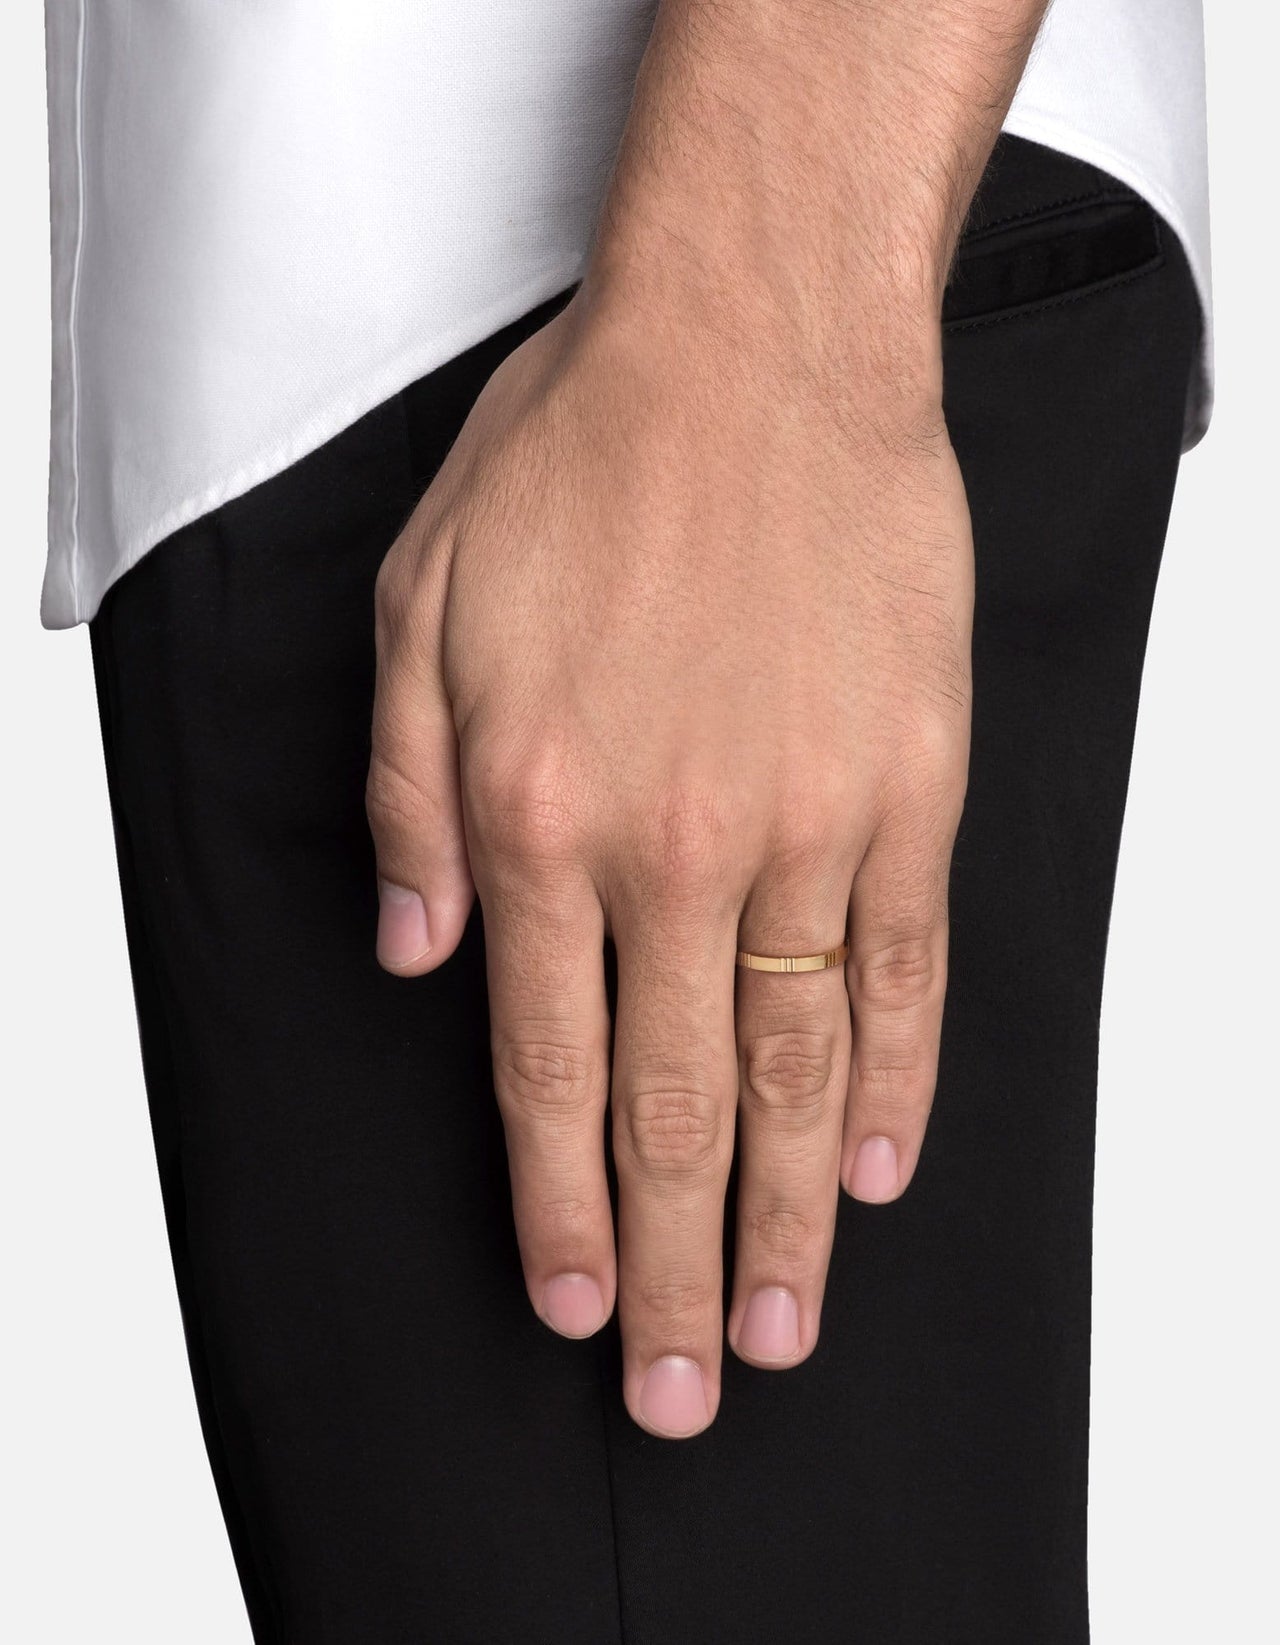 CARTIER Laniere Ring B4045000 K18 white gold #4.25(US Size) Women | eBay